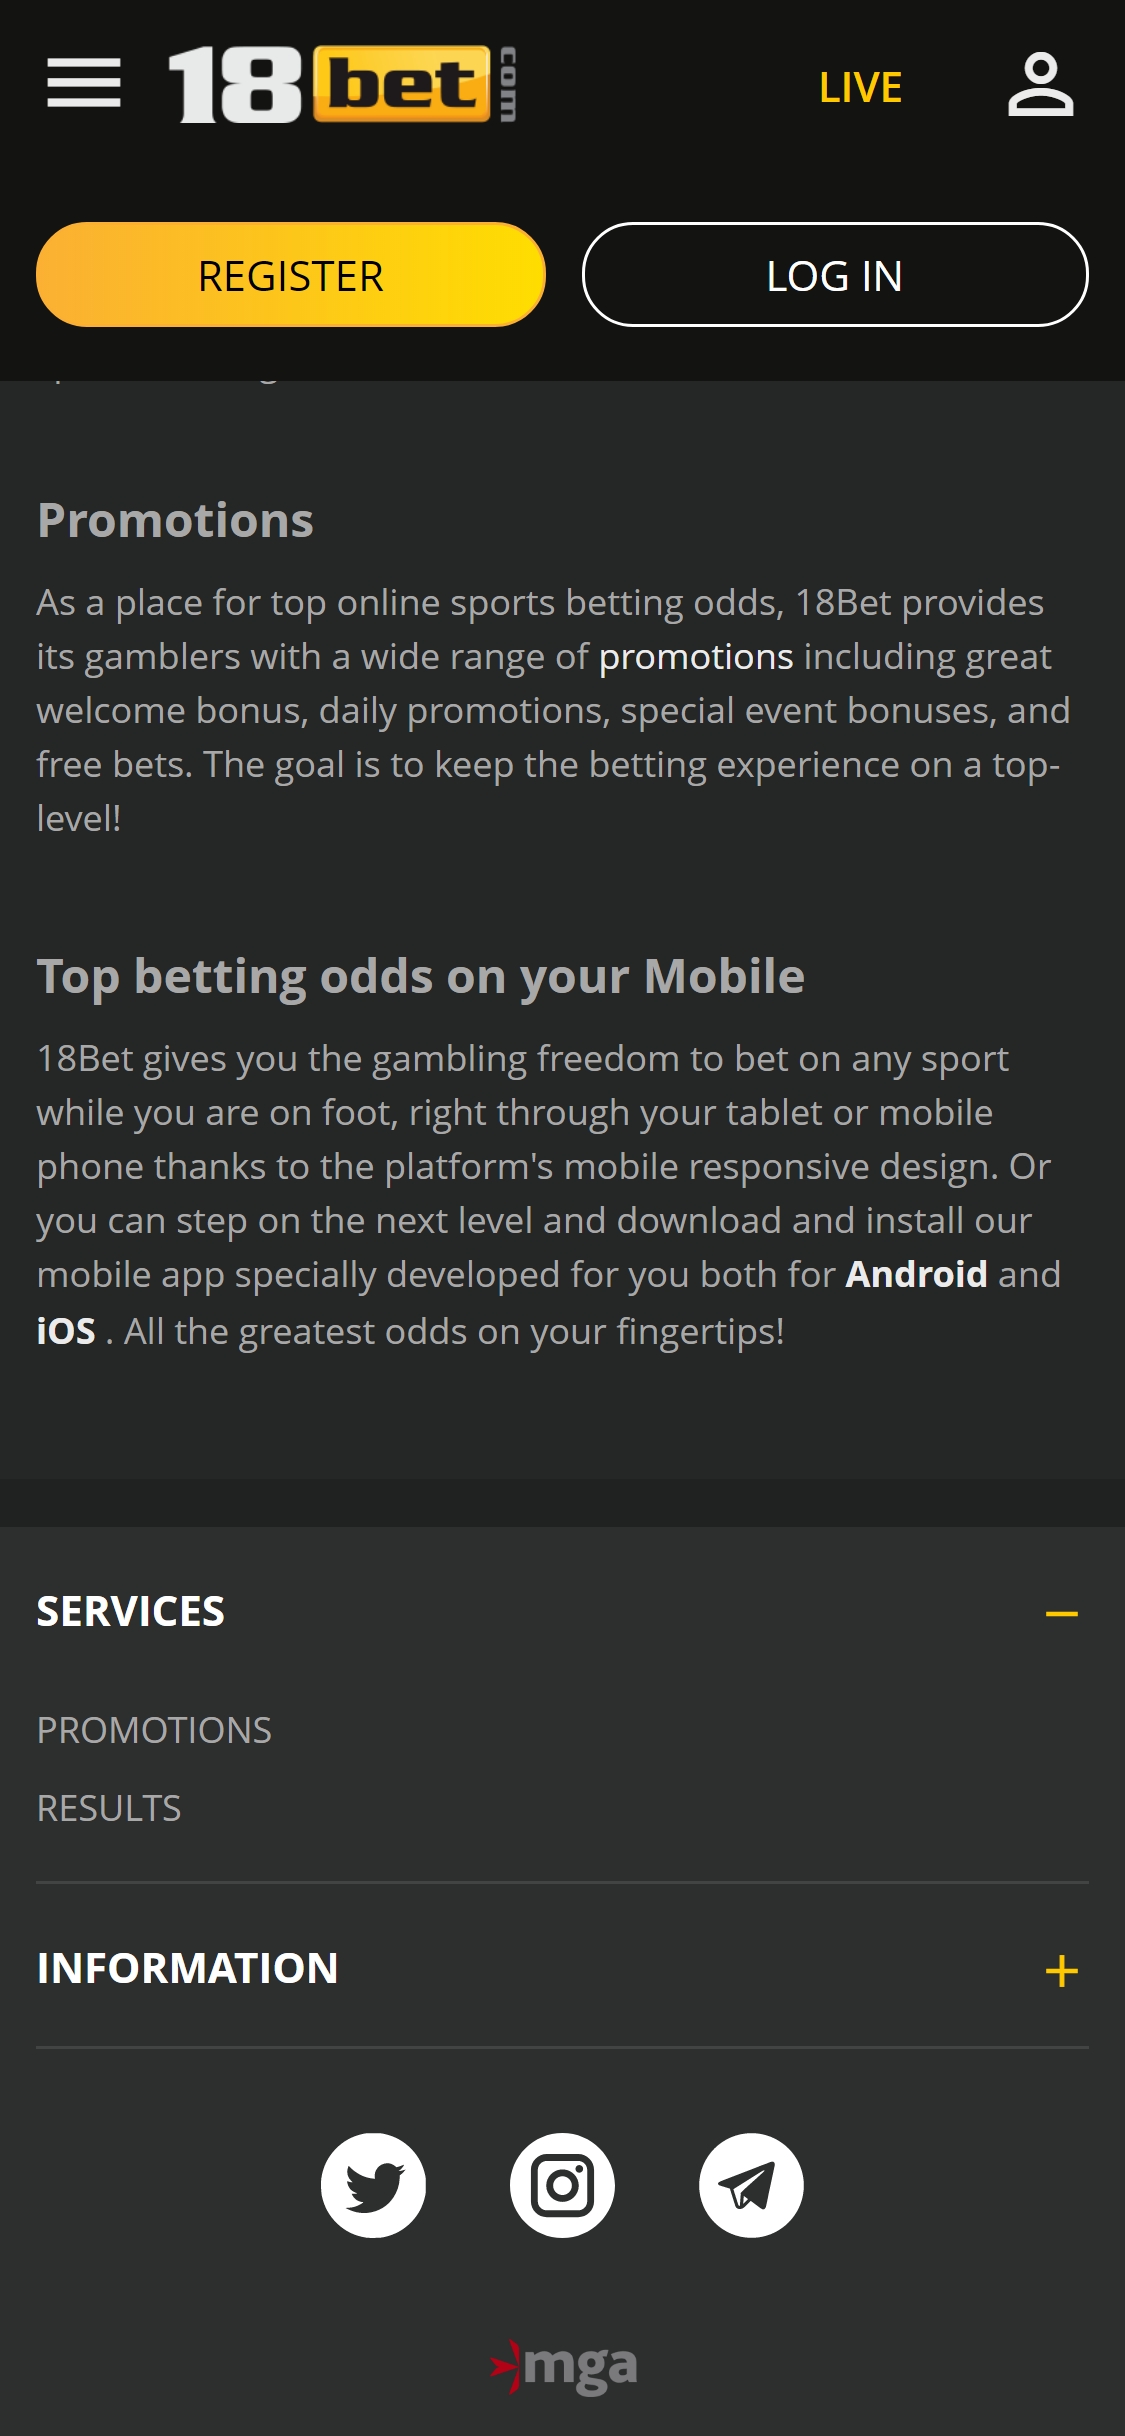 18Bet Casino Mobile App Review